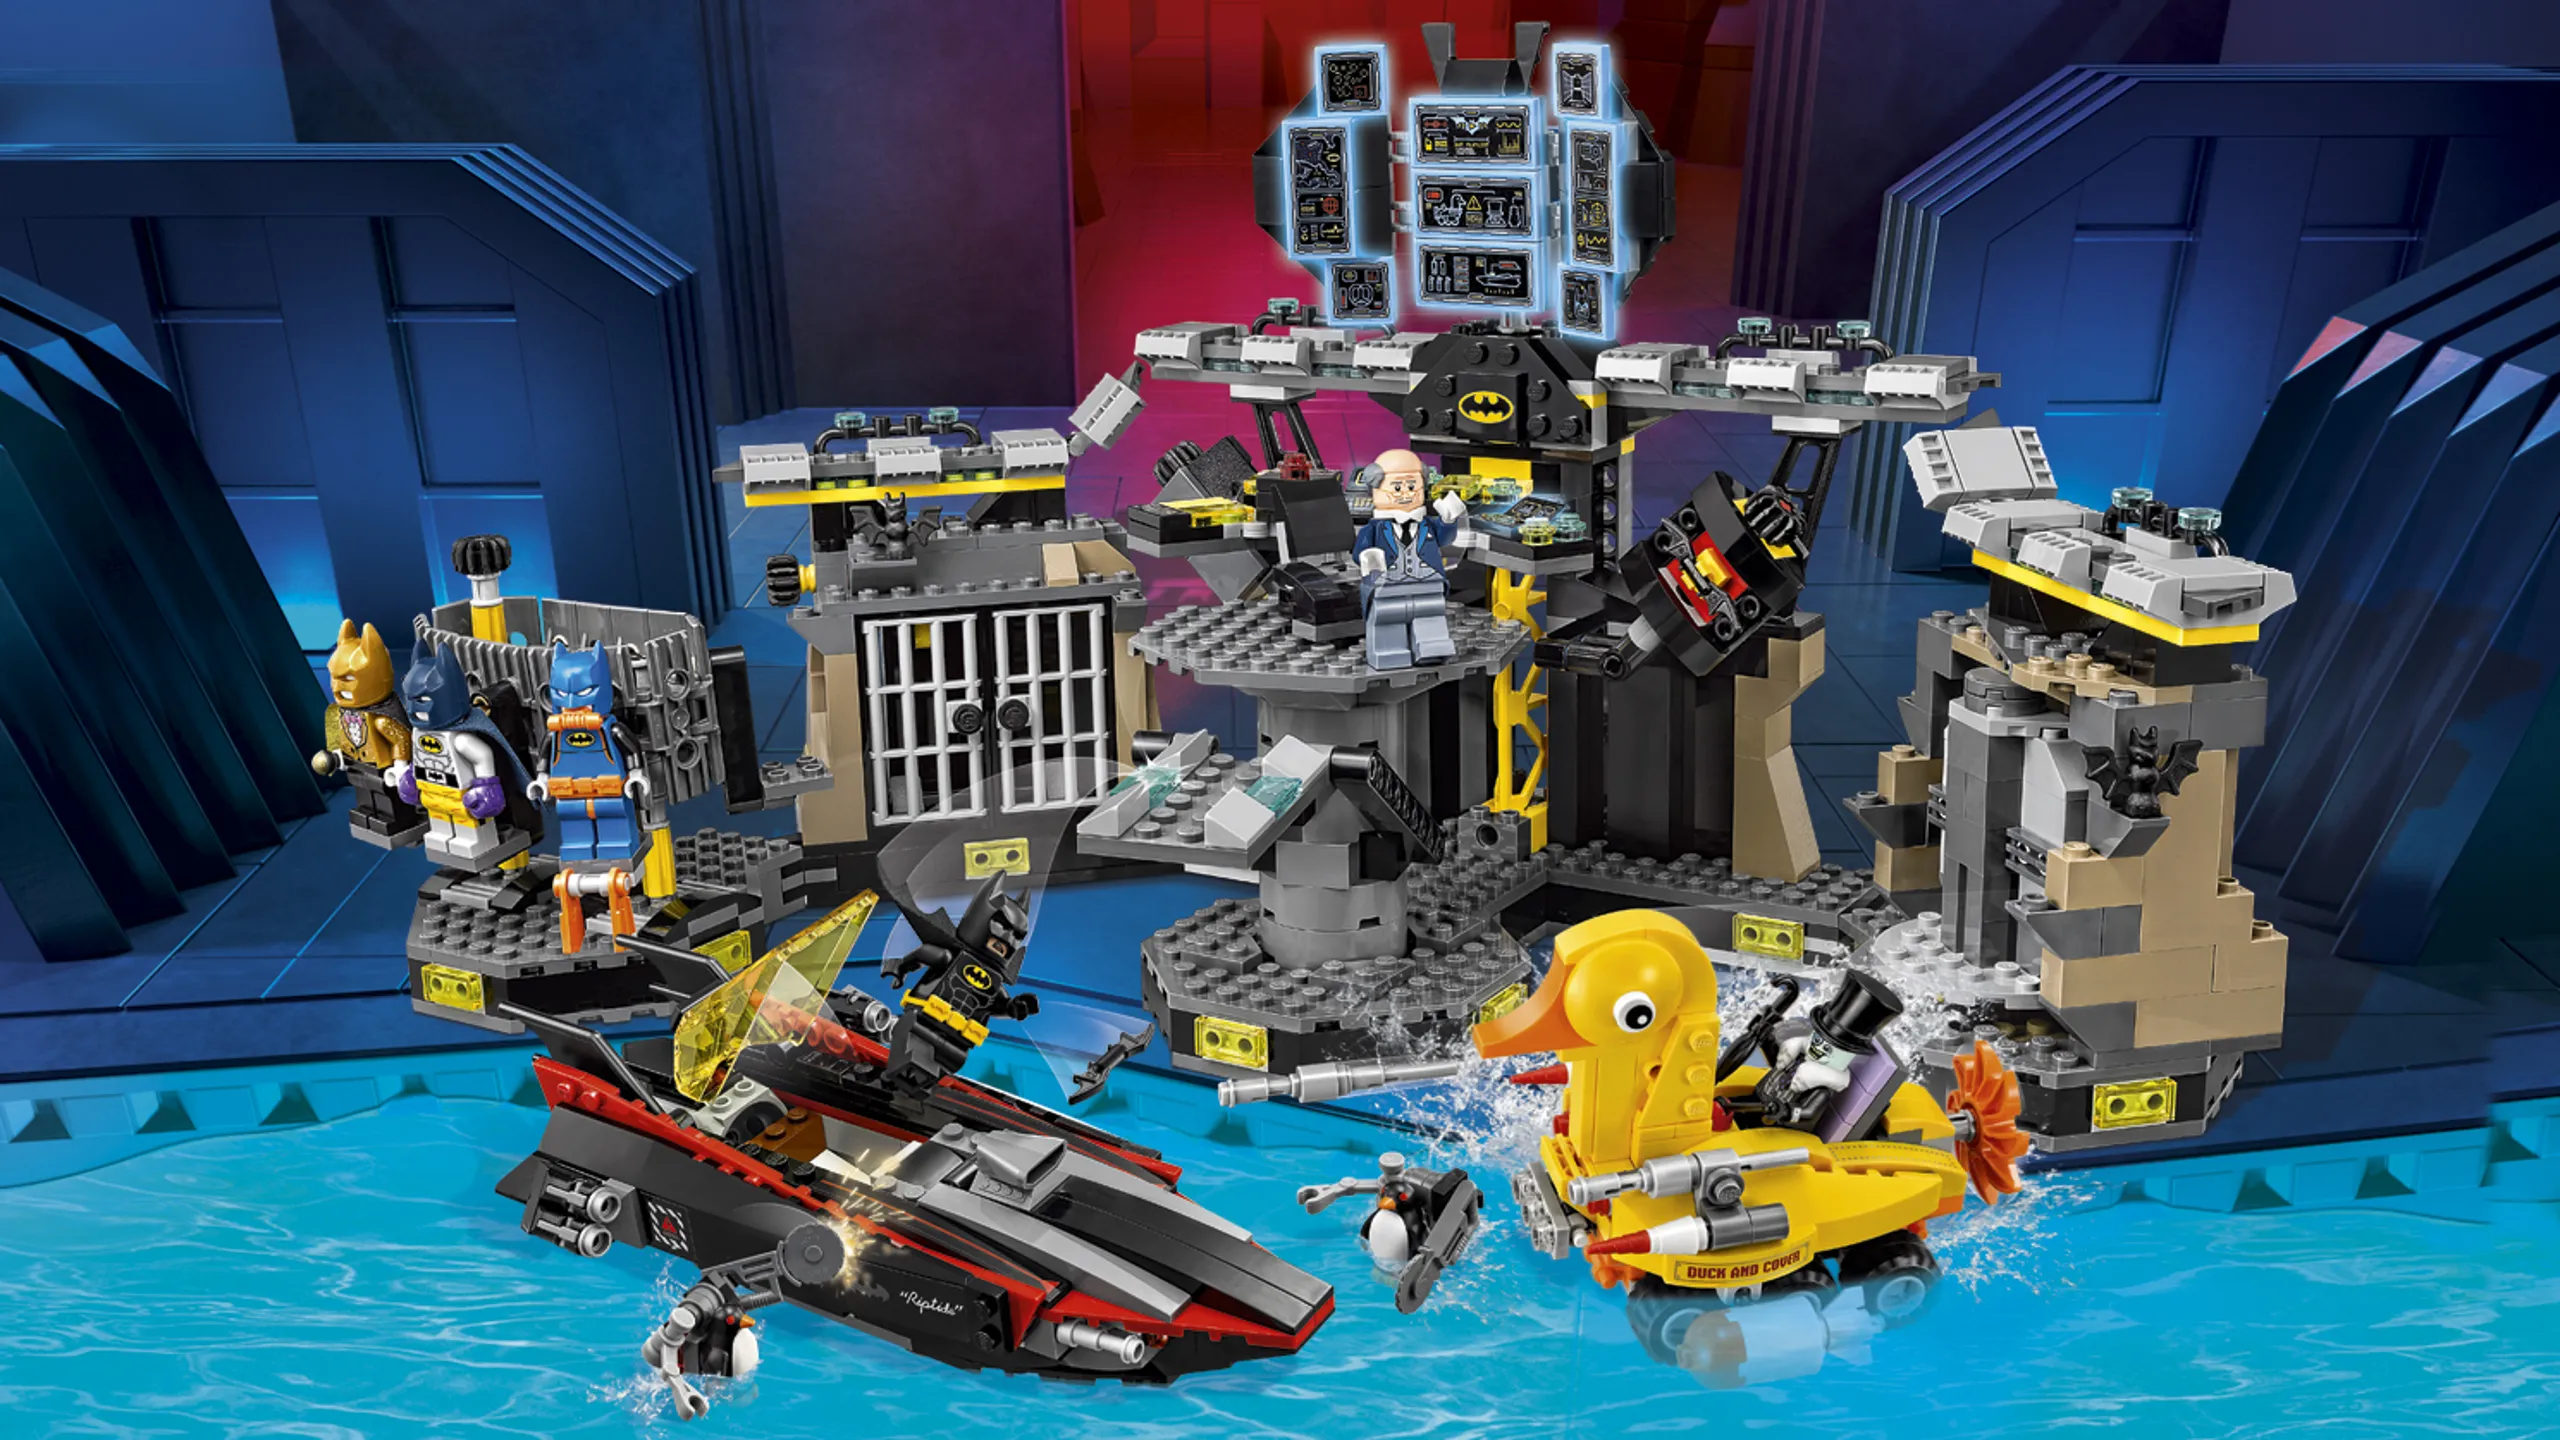 LEGO Batman Movie Batcave Break-In - 70909 - The Penguin breaks in on his Duckmobile and attacks the Batboat.